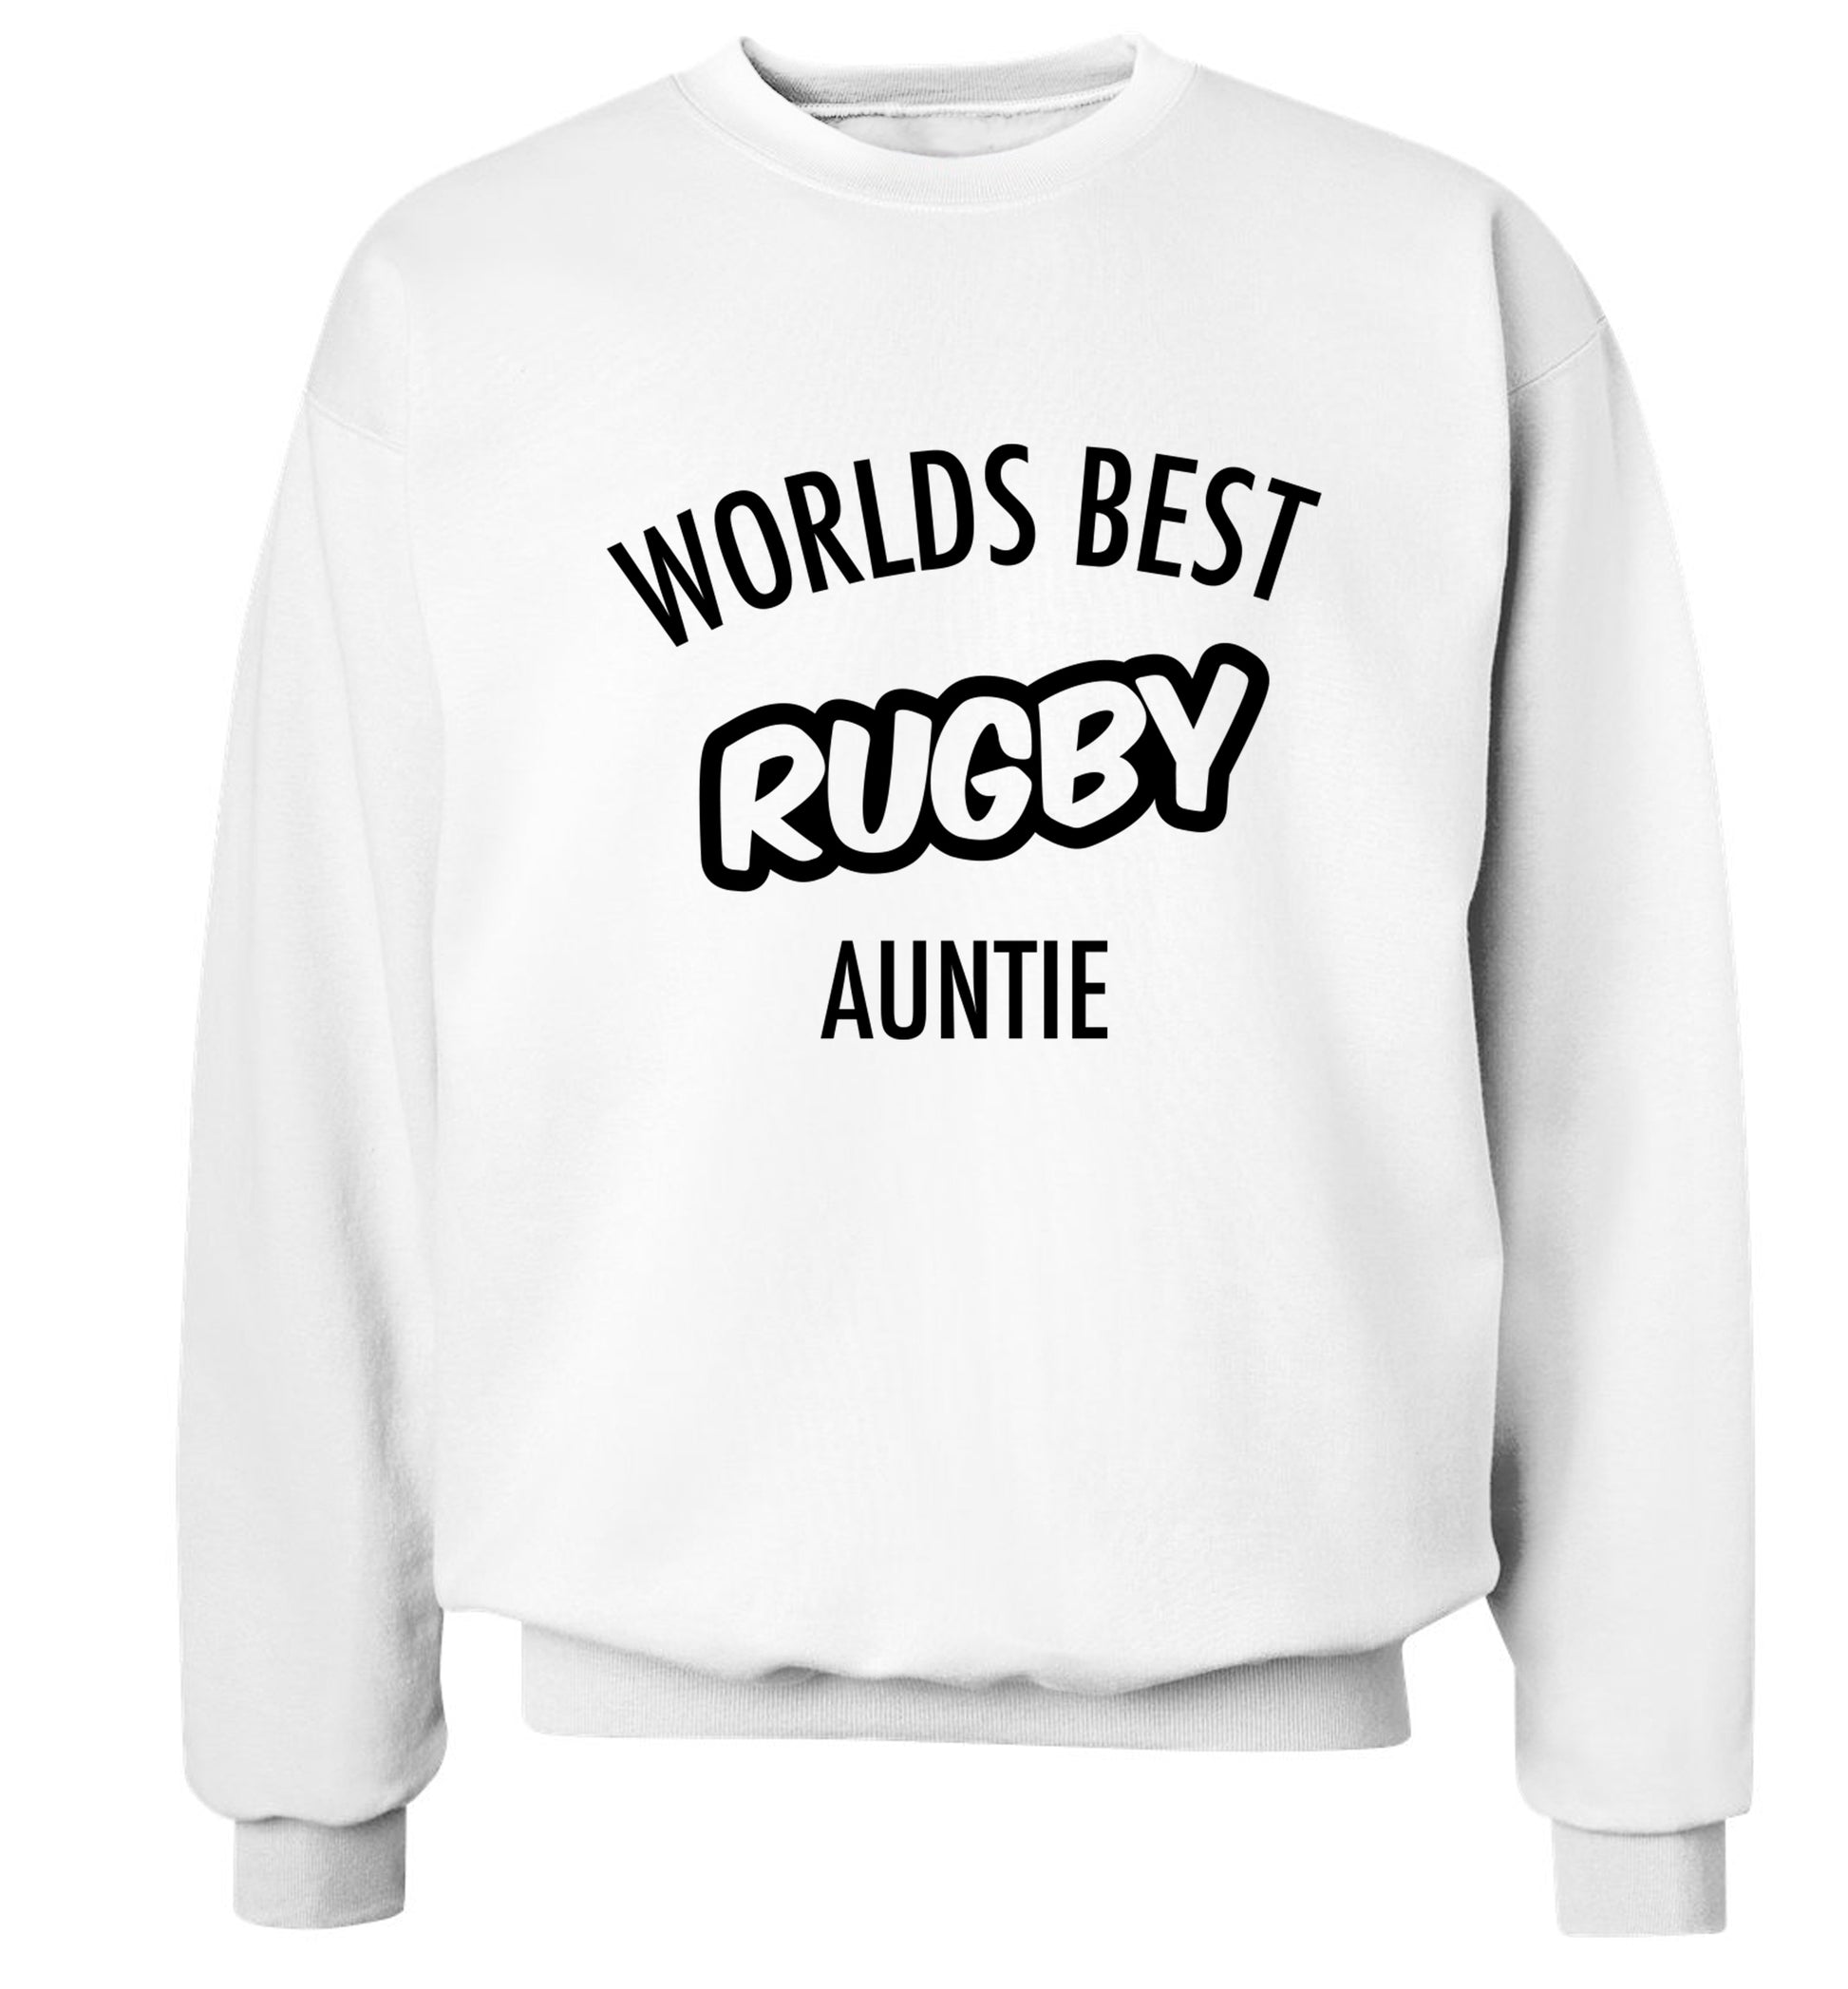 Worlds best rugby auntie Adult's unisex white Sweater 2XL